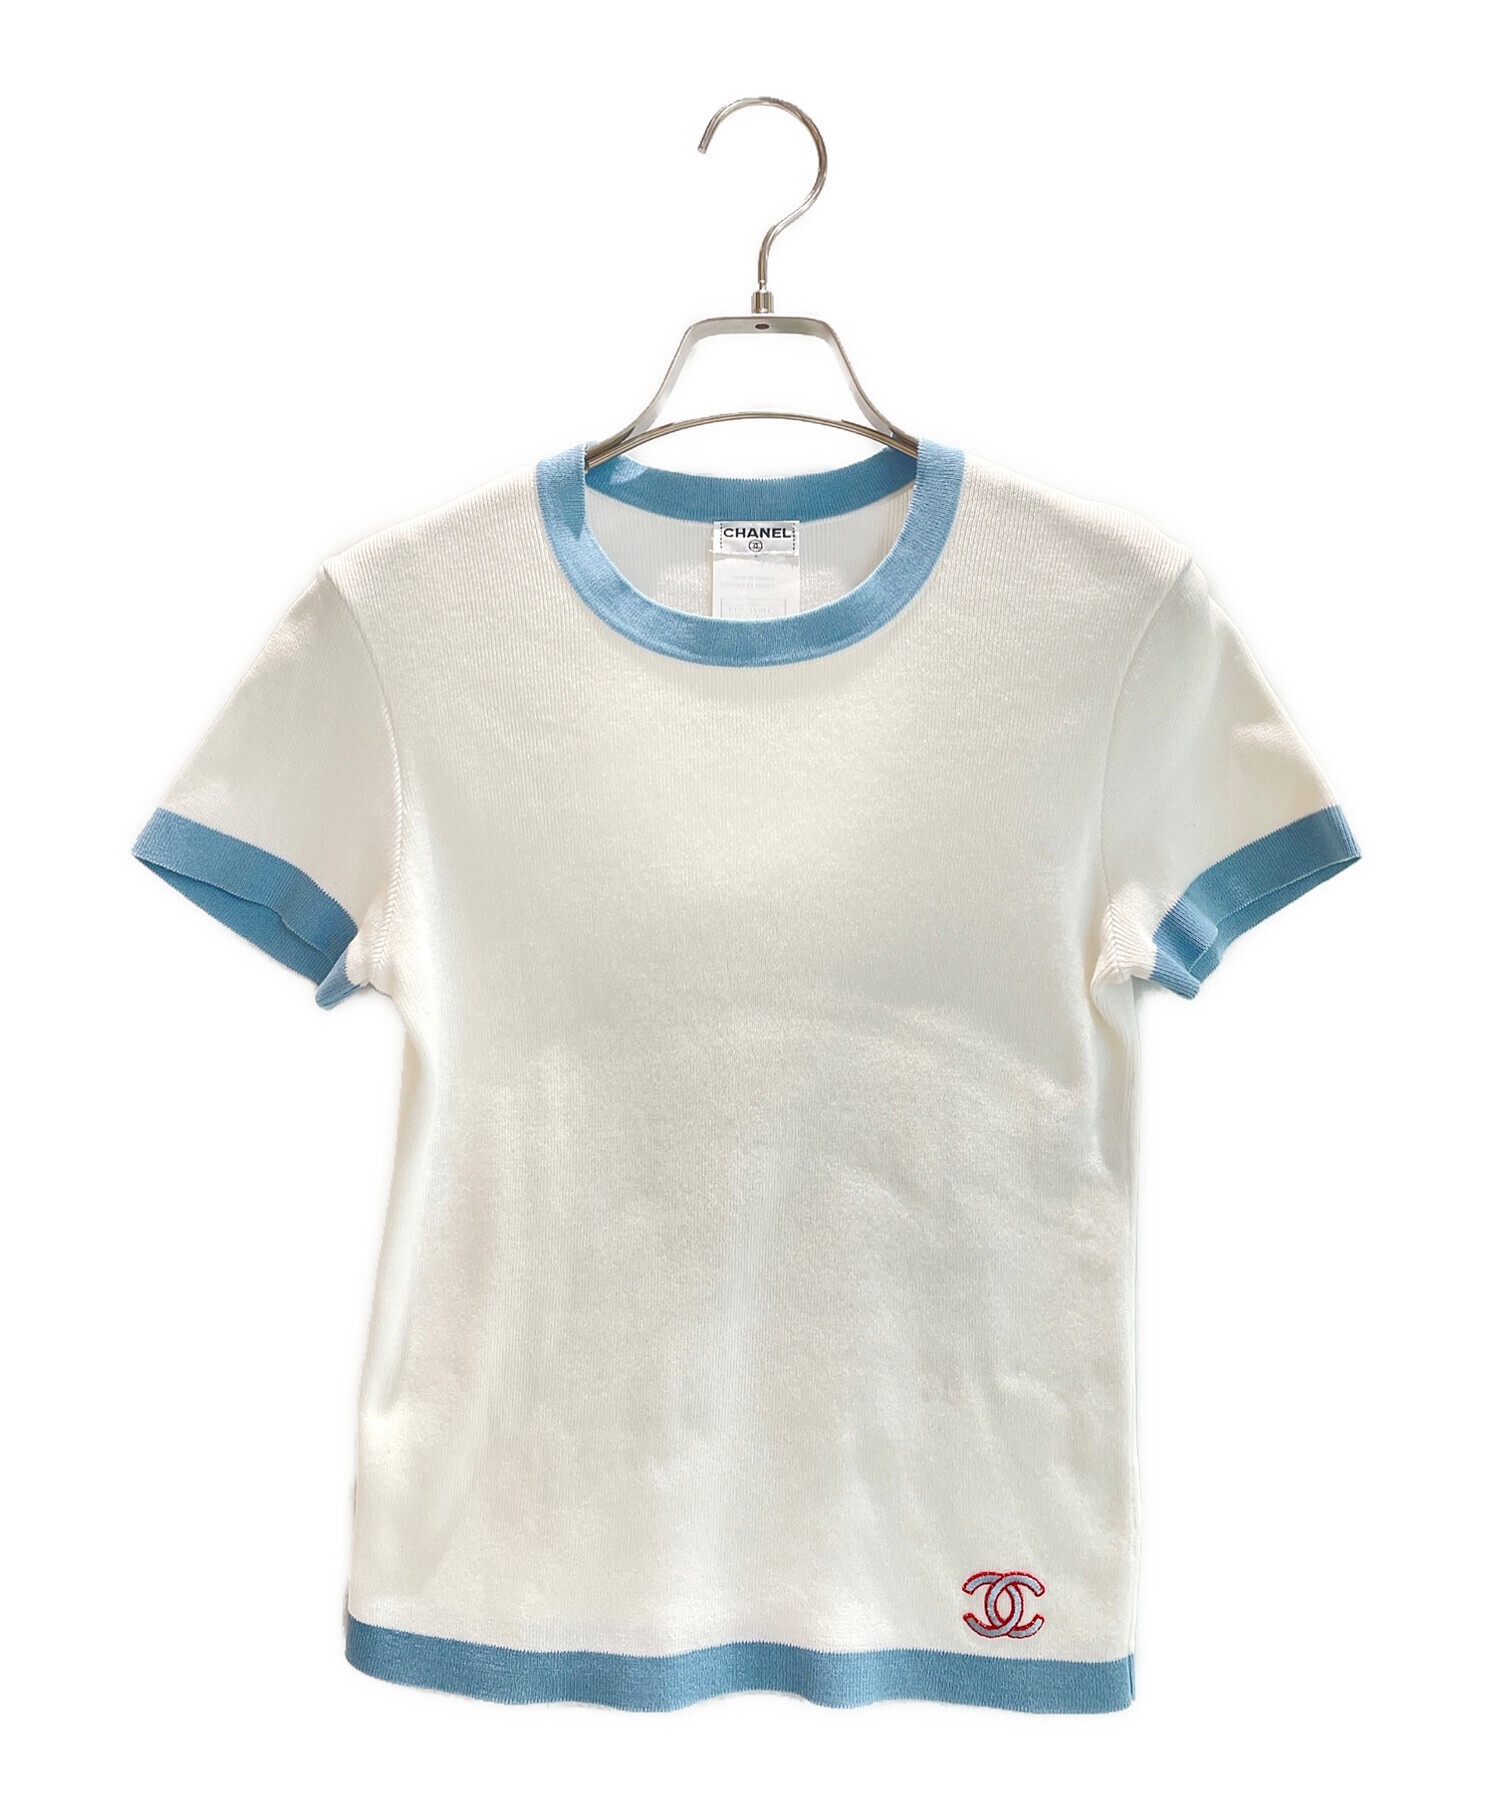 CHANEL (シャネル) ココマークリンガーニットTシャツ ホワイト×スカイブルー サイズ:40